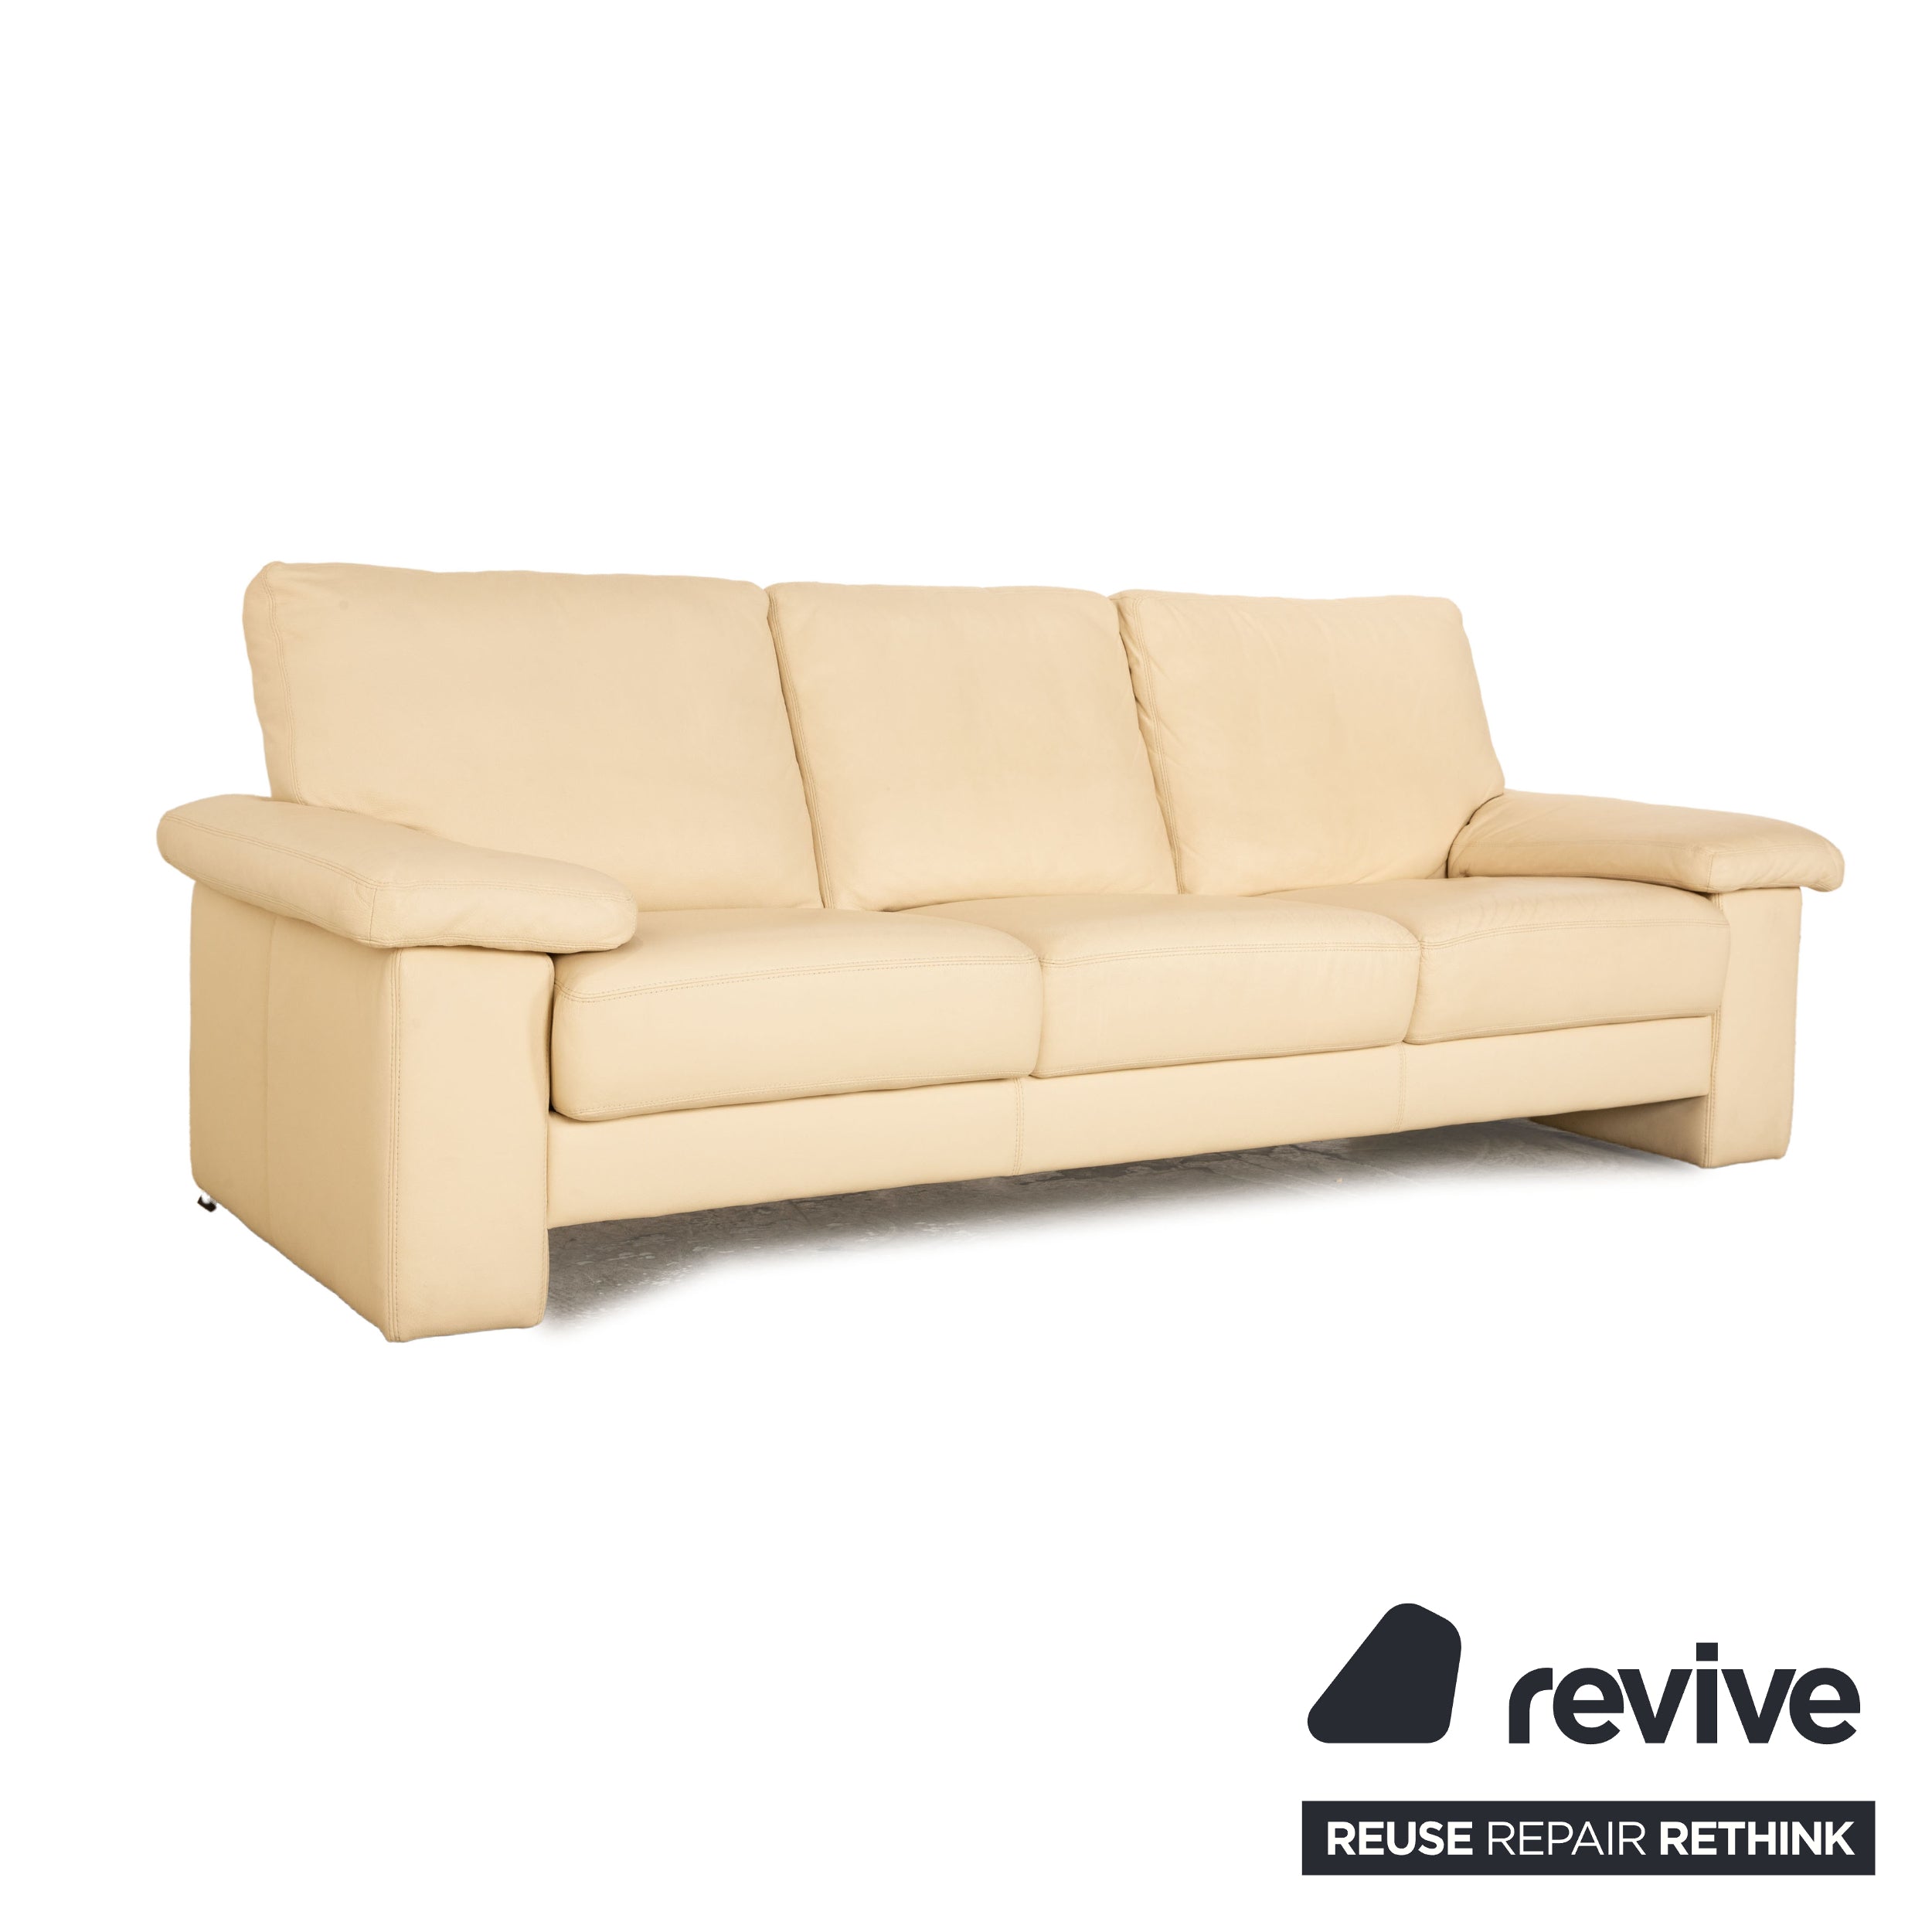 Musterring MR 2830 Leder Dreisitzer Creme Sofa Couch